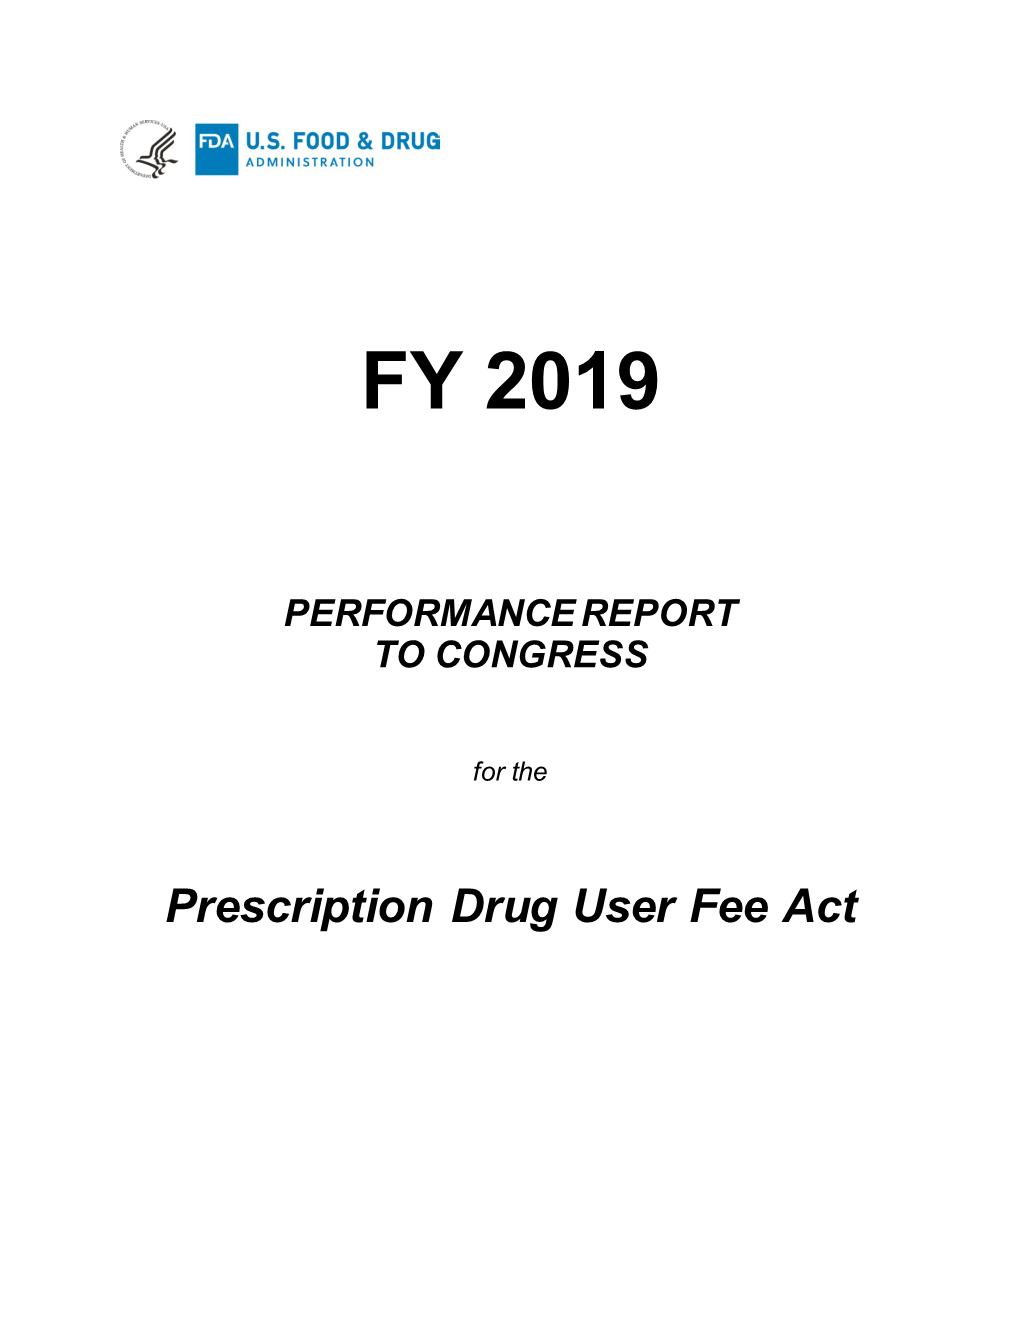 FY 2019 PDUFA Performance Report Commissioner’S Report